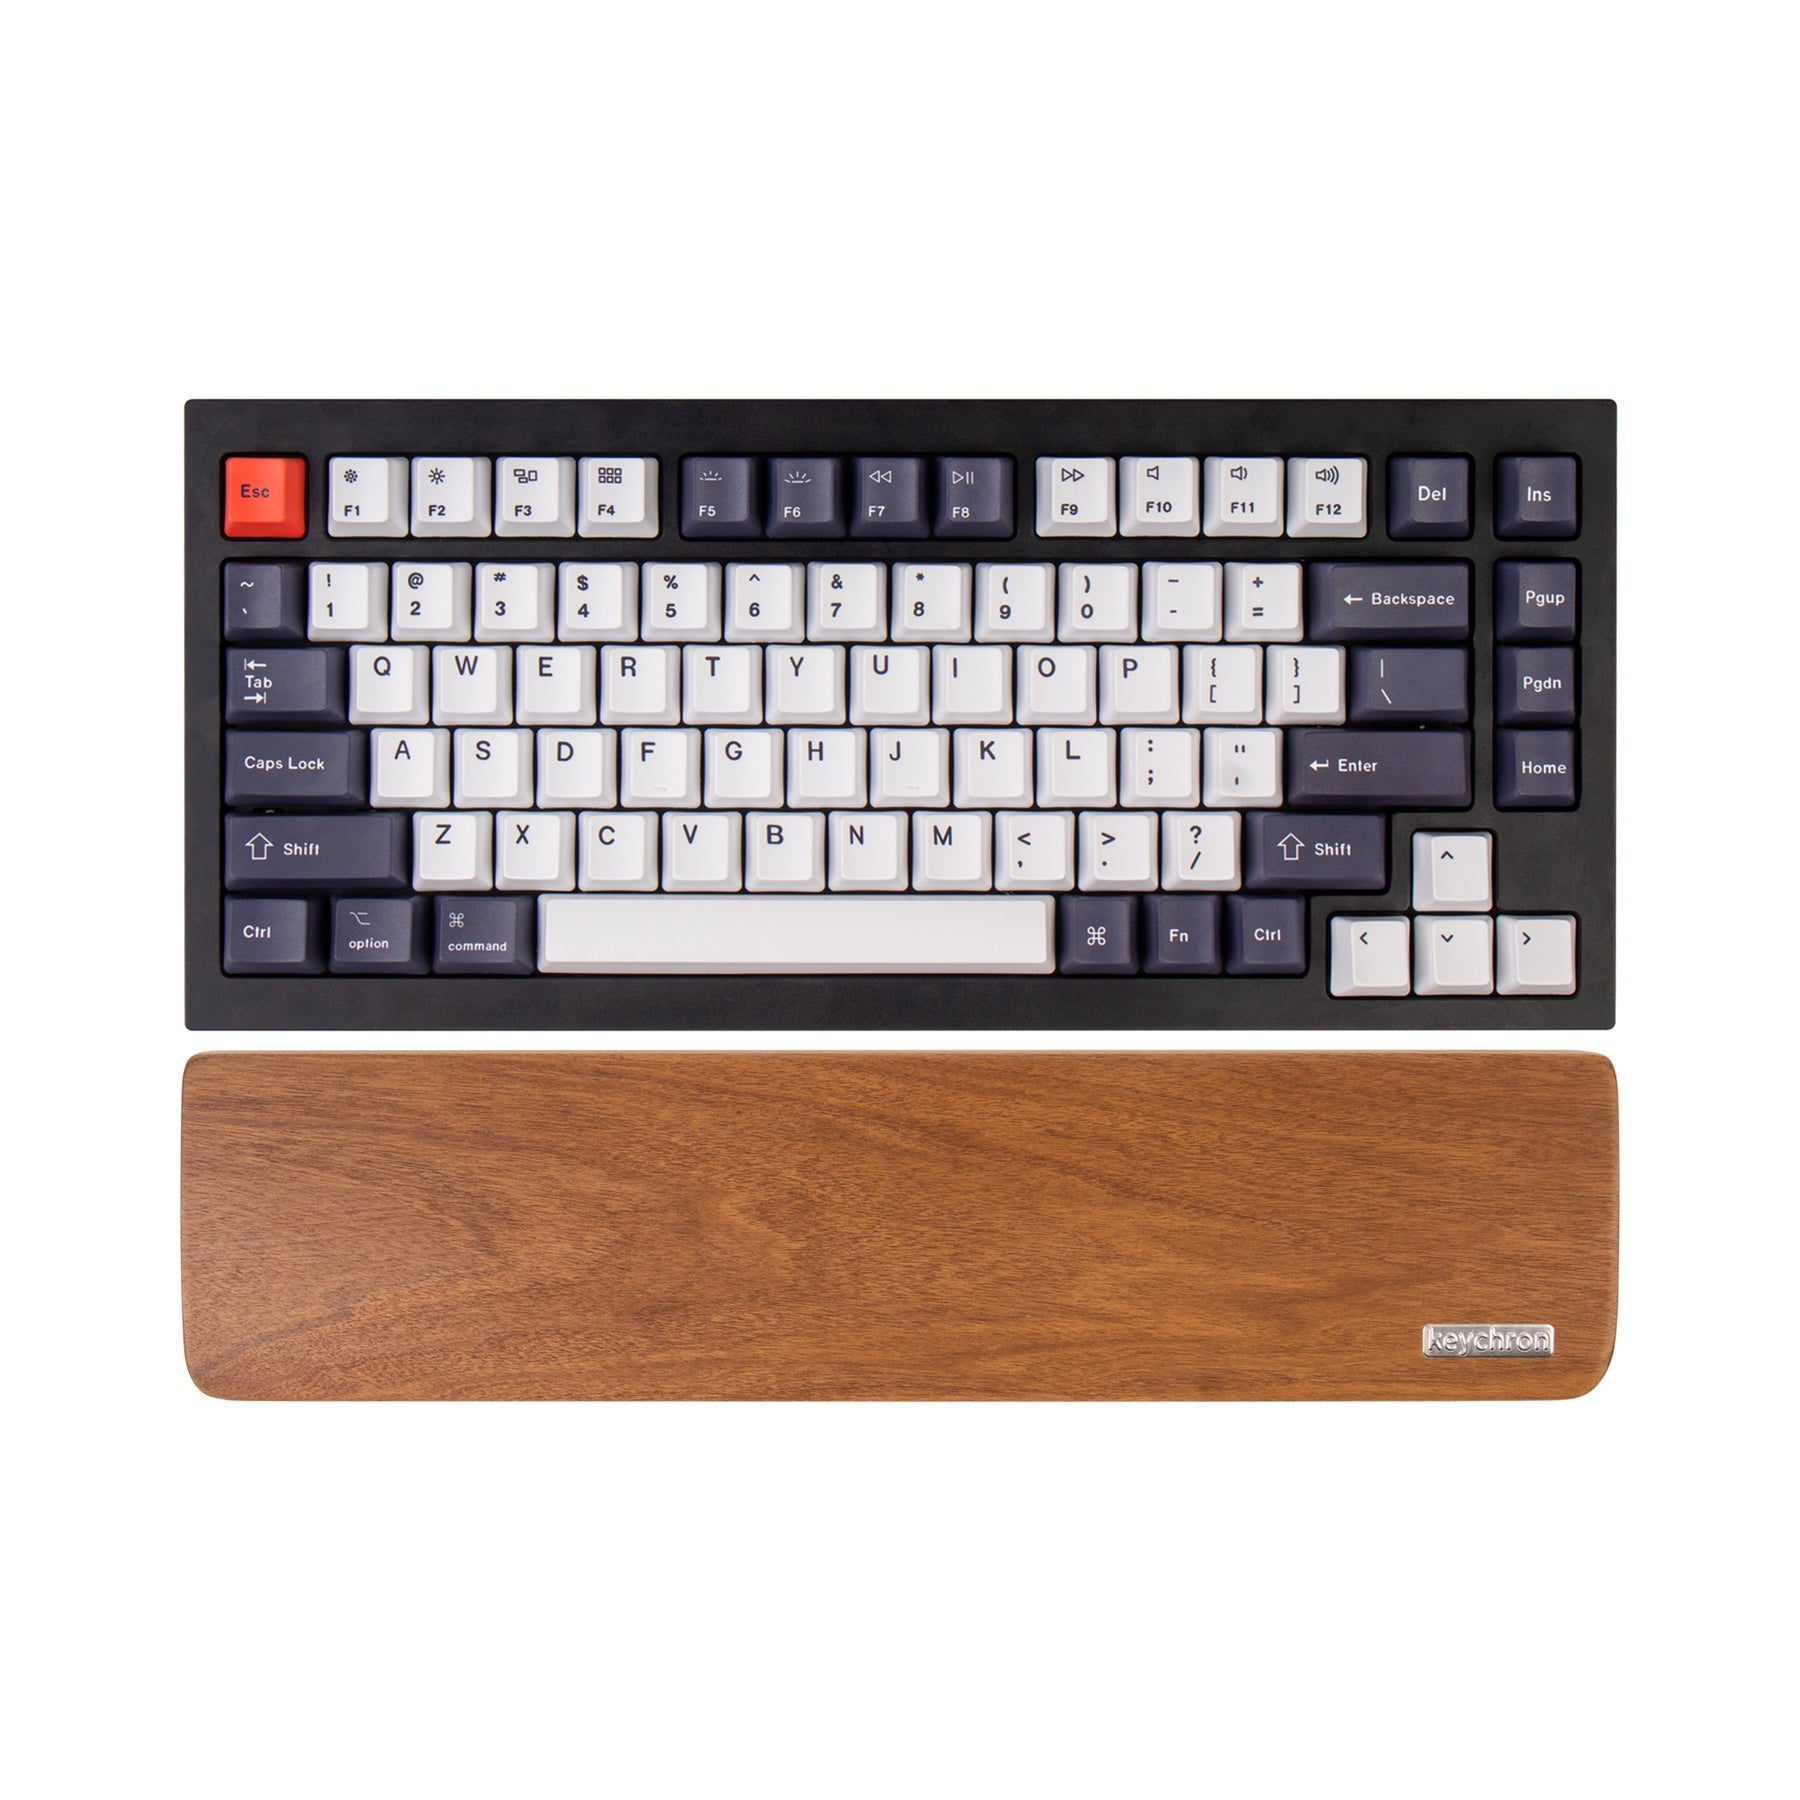 Keychron Keyboard Wooden Palm Rest